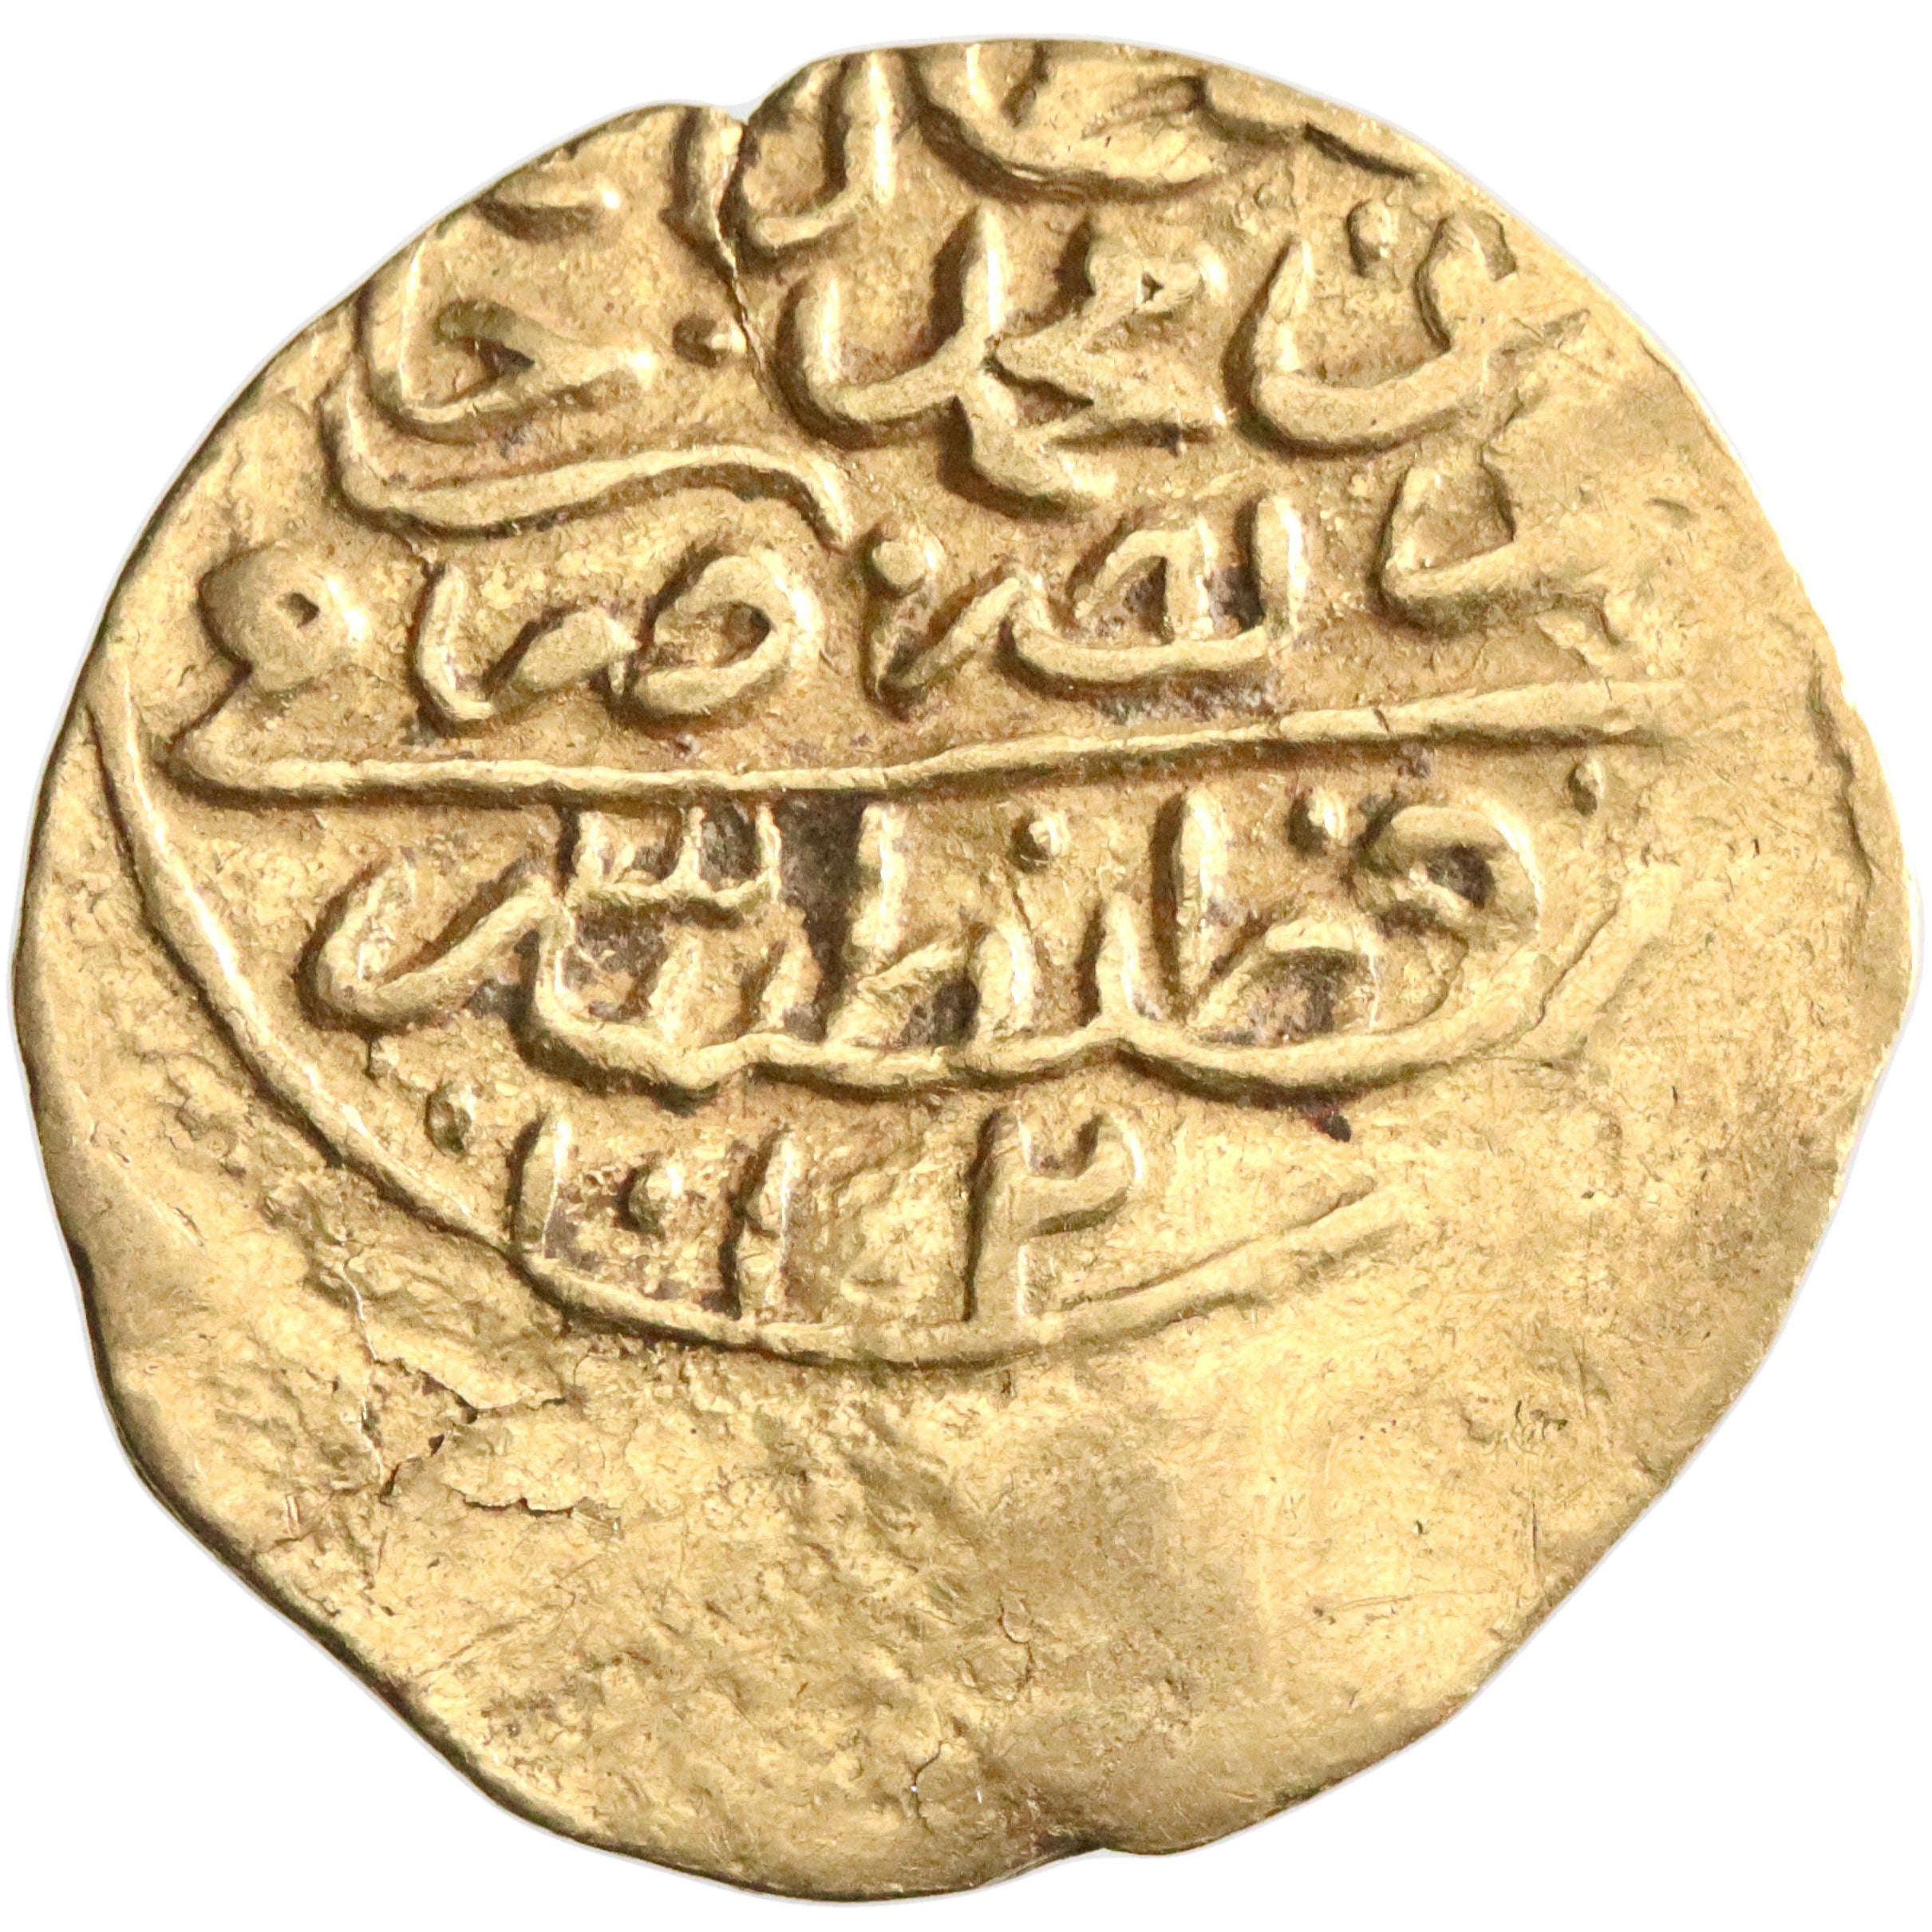 Ottoman, Ahmed I, gold sultani, Kostantiniye (Constantinople) mint, AH 1012